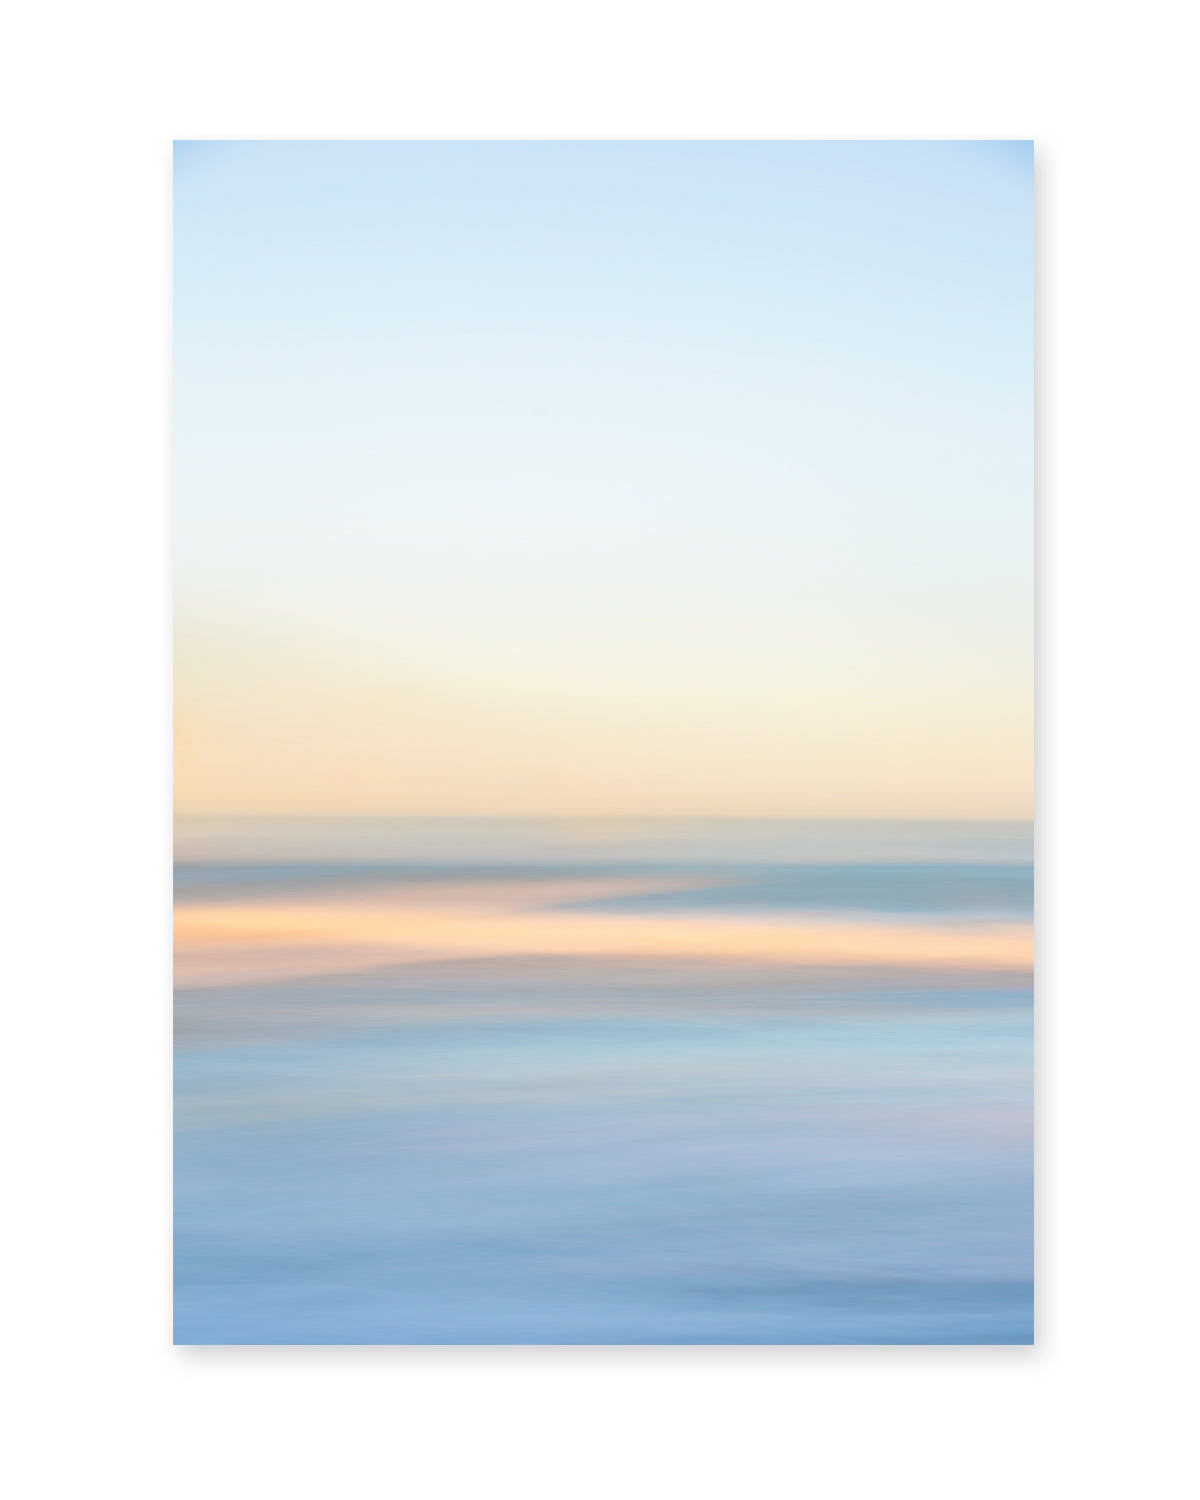 Abstract Minimal Print, Blue Yellow Beach Photograph, Wright and Roam